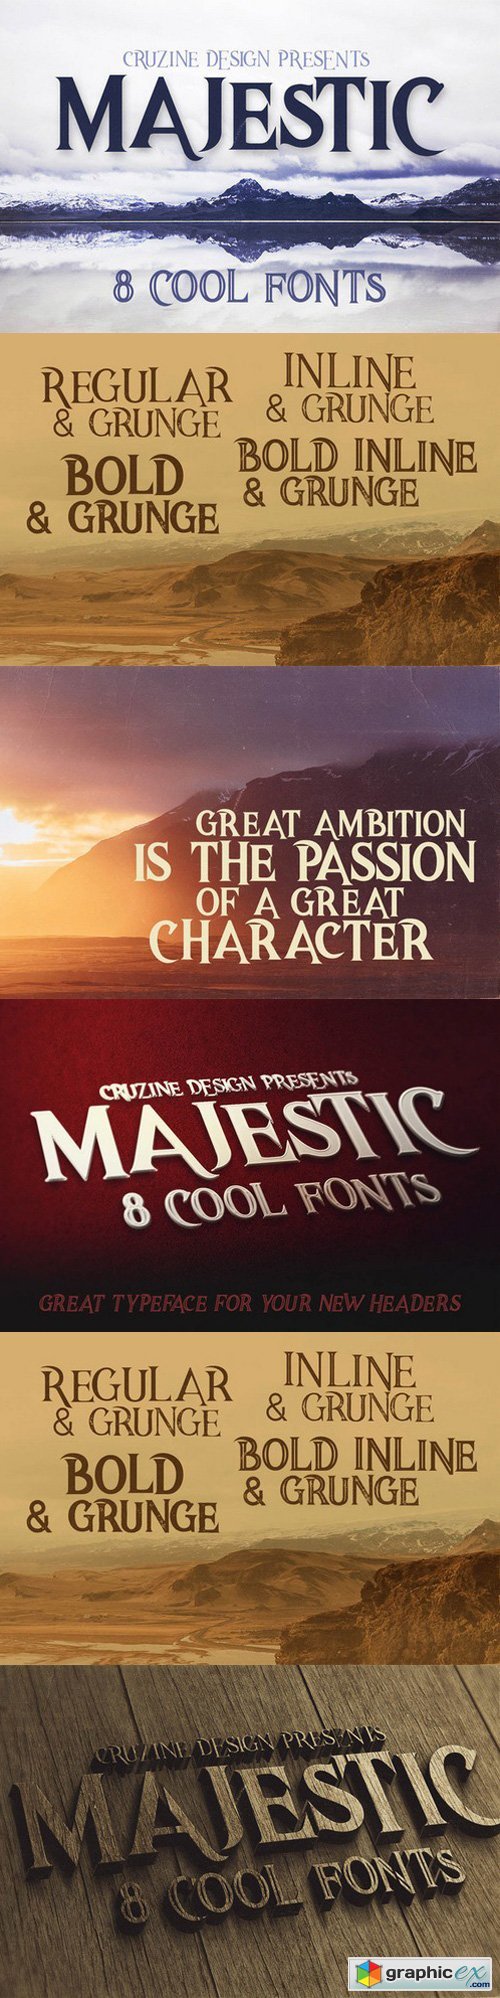 Majestic Typeface